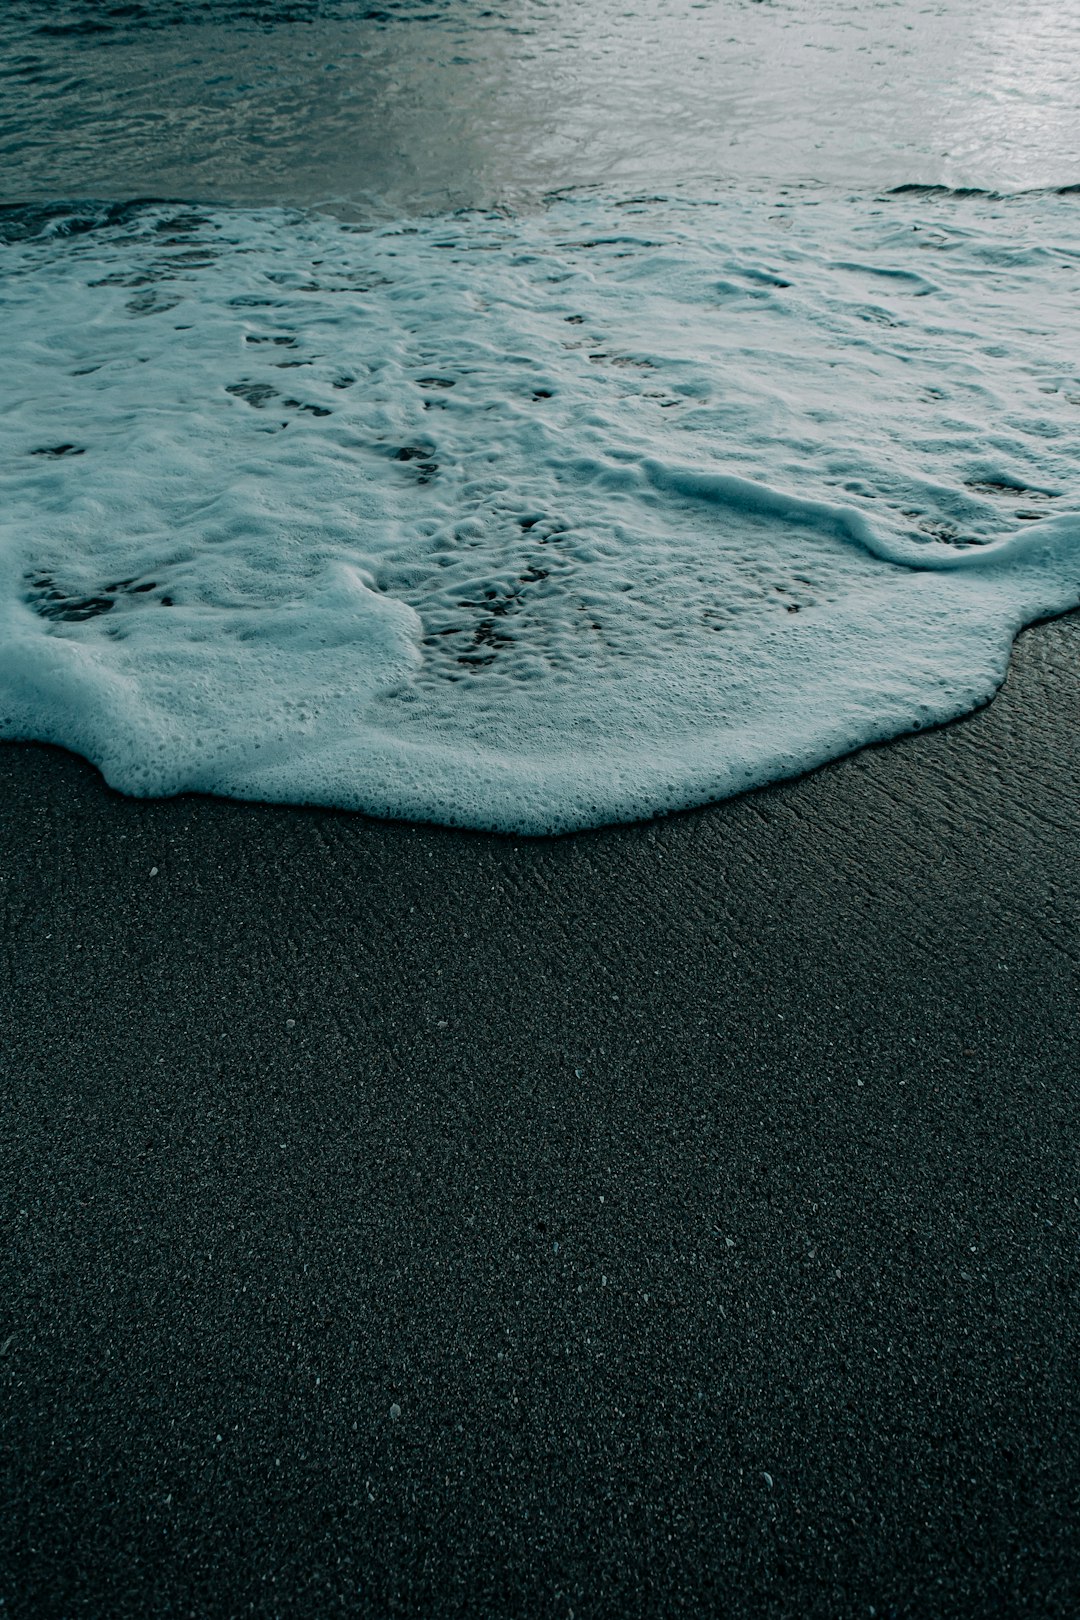 sea waves on black sand during daytime